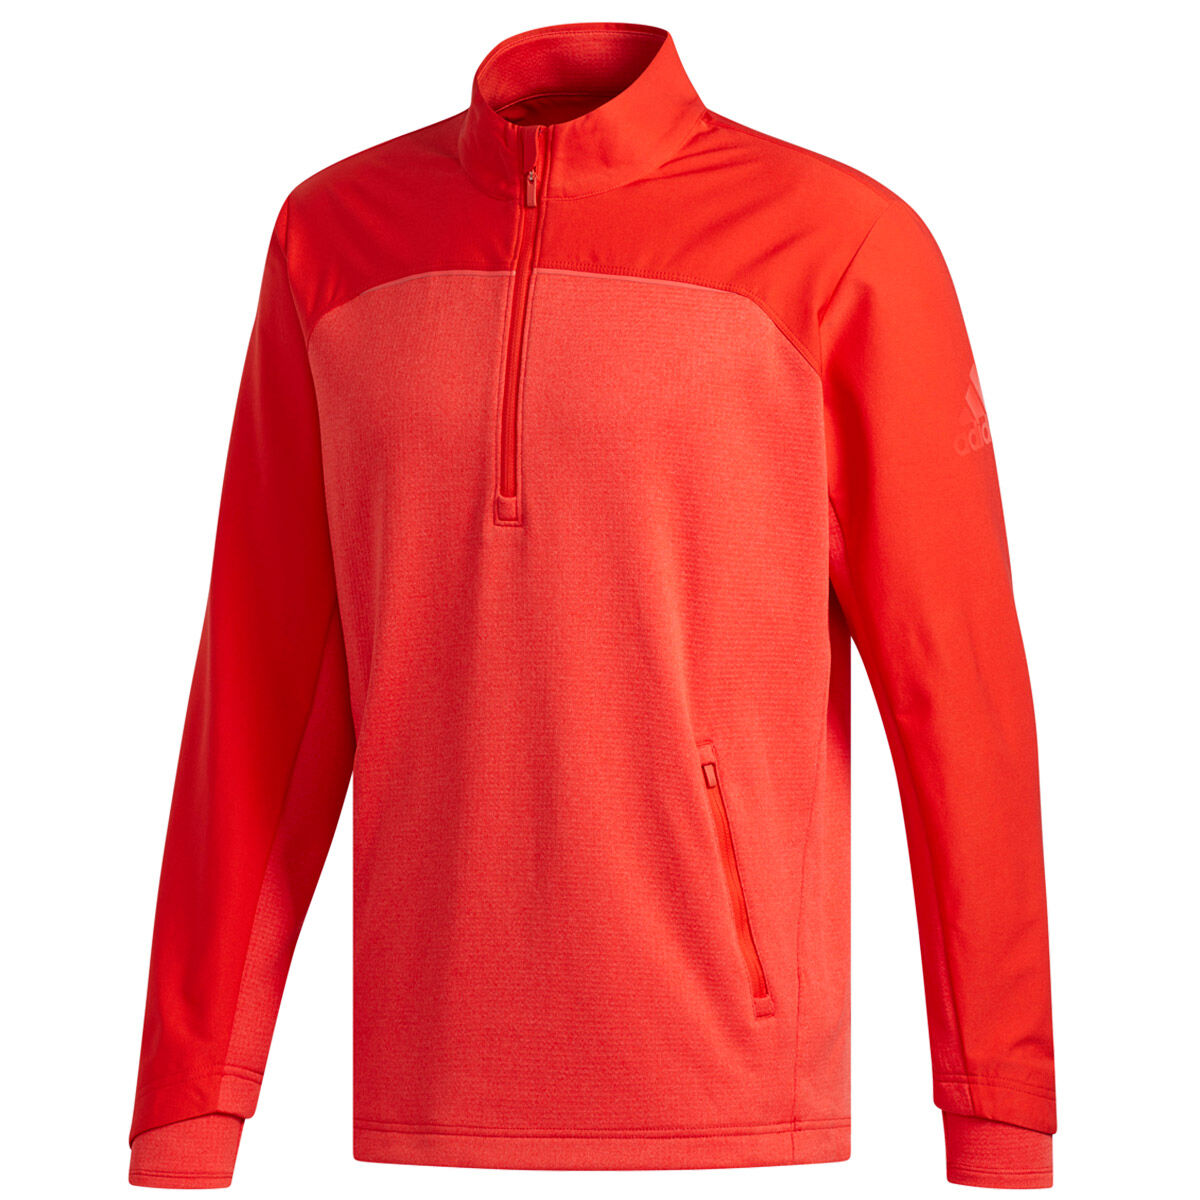 Veste adidas Golf Go-To 1/4 Zip, homme, Petit, Red/aero red | Online Golf